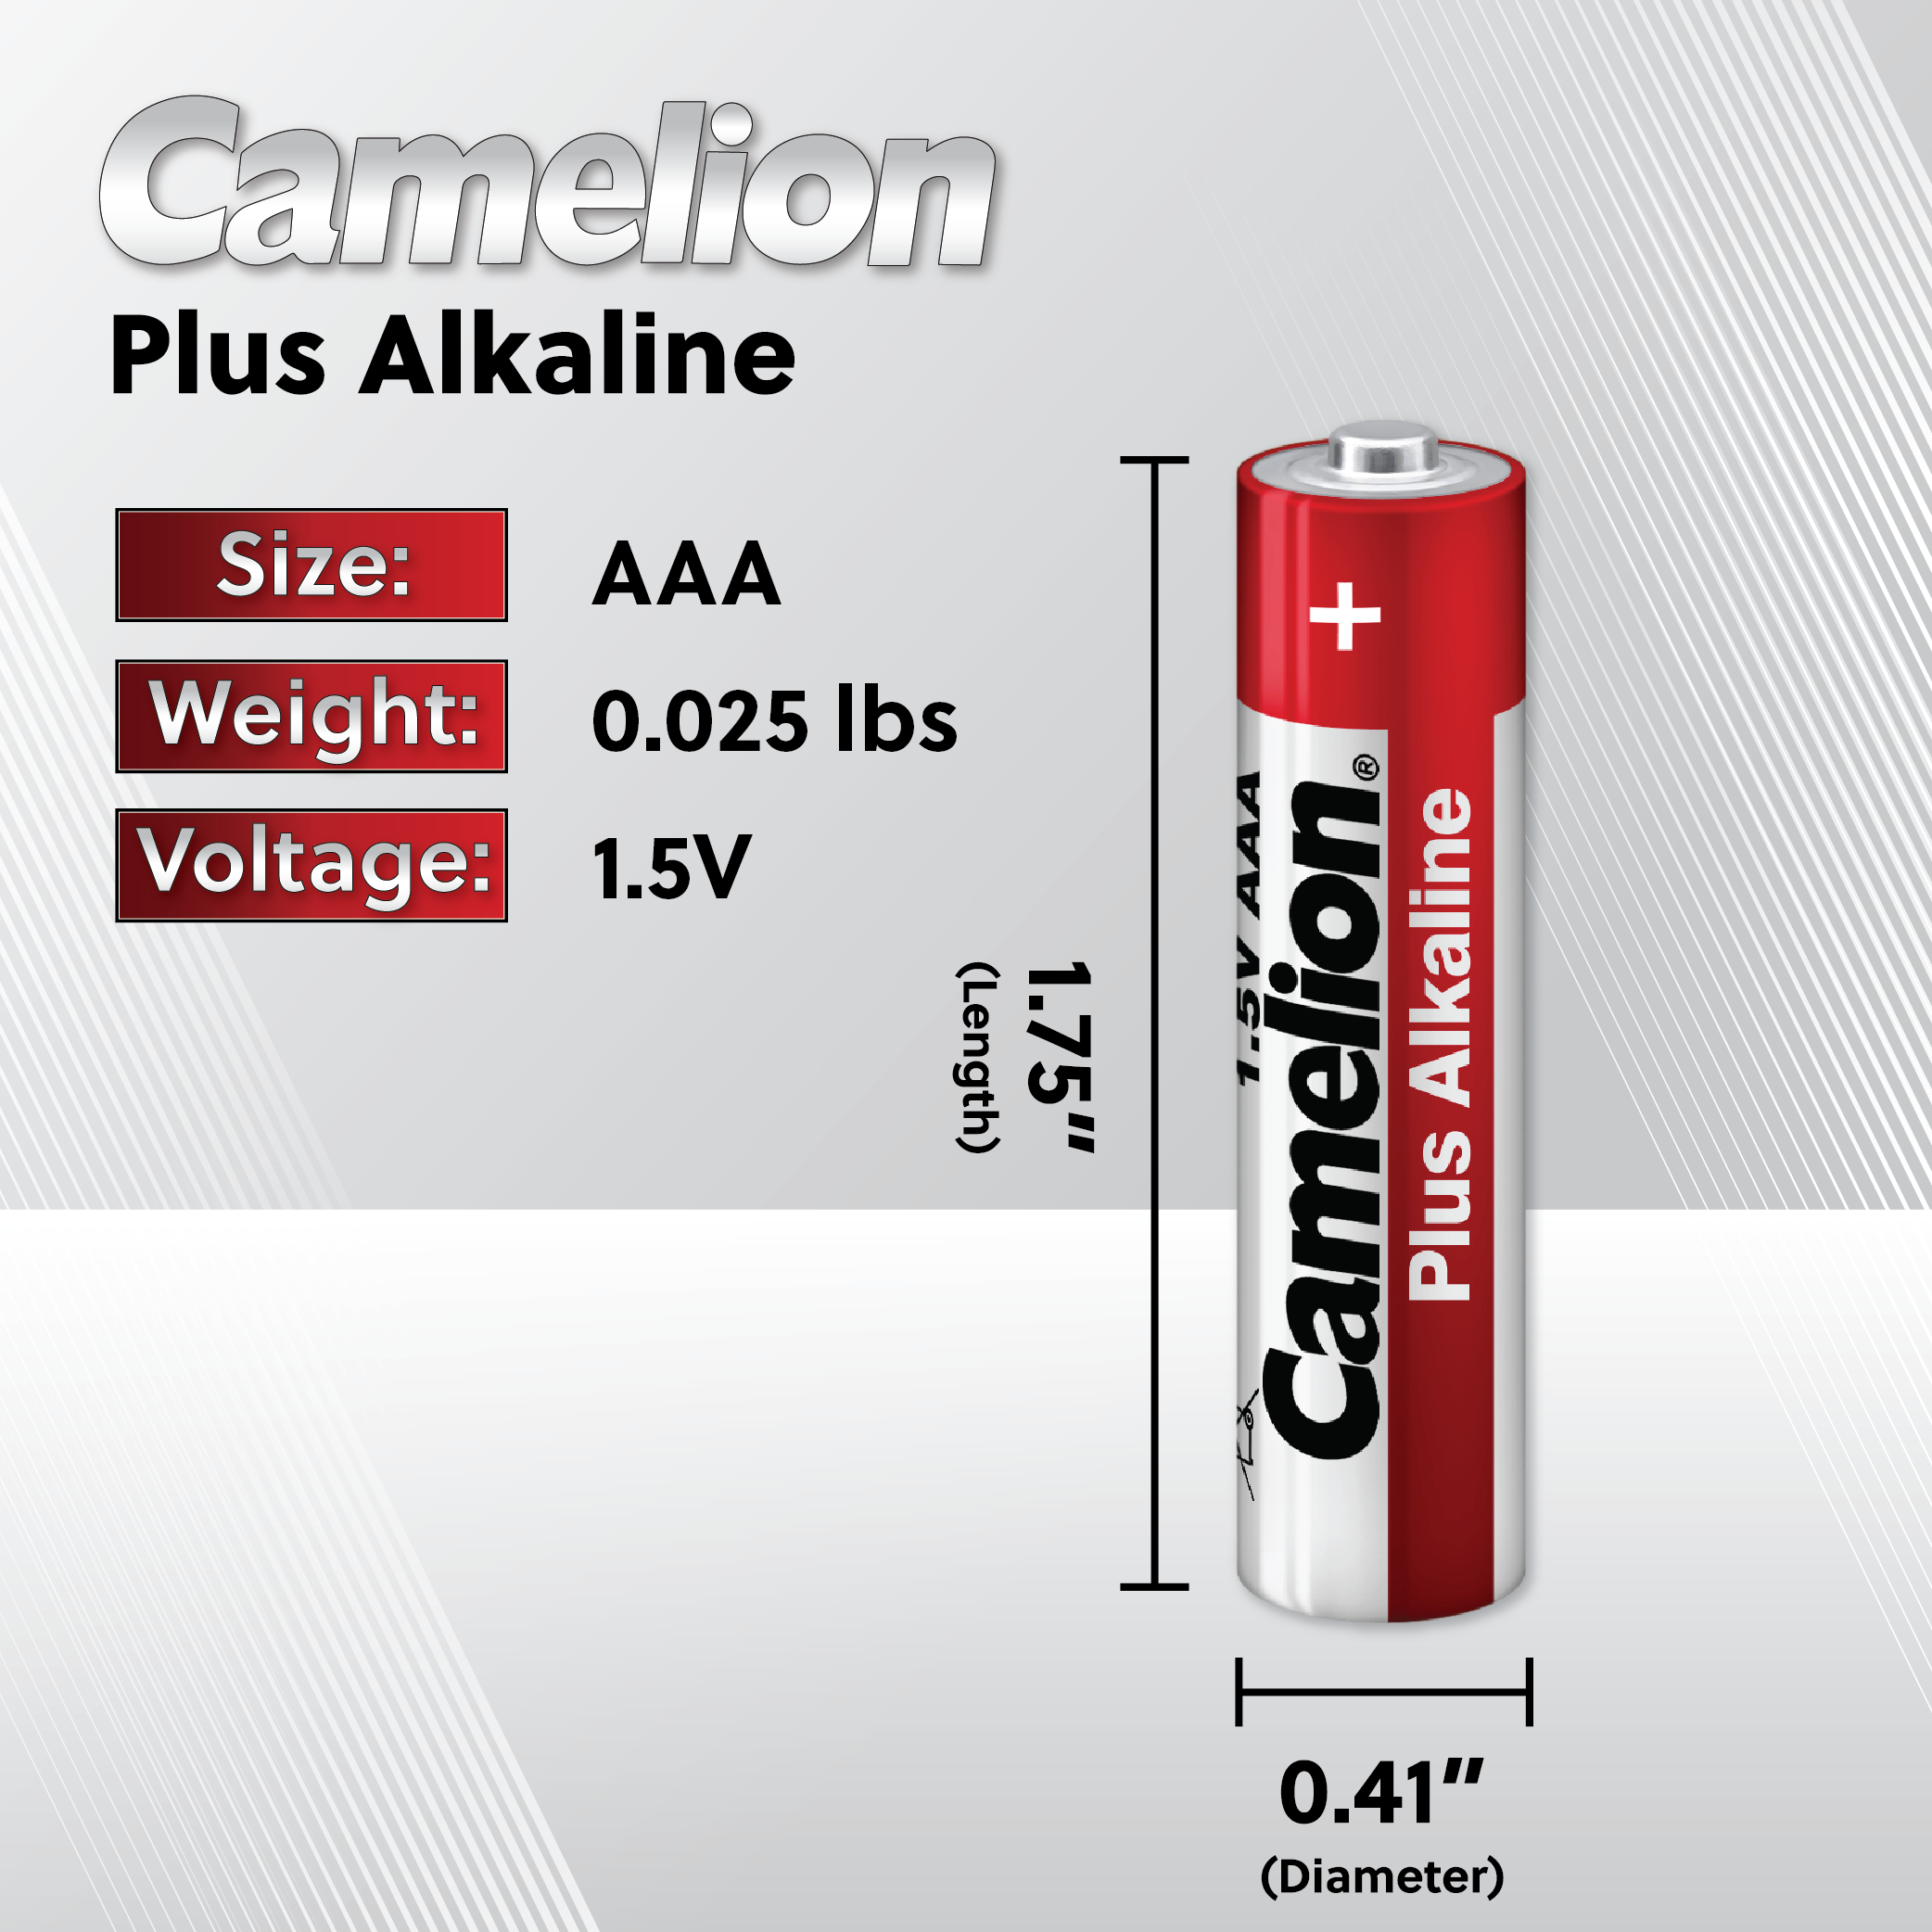 Camelion AAA Plus Alkaline 24 Pack Box